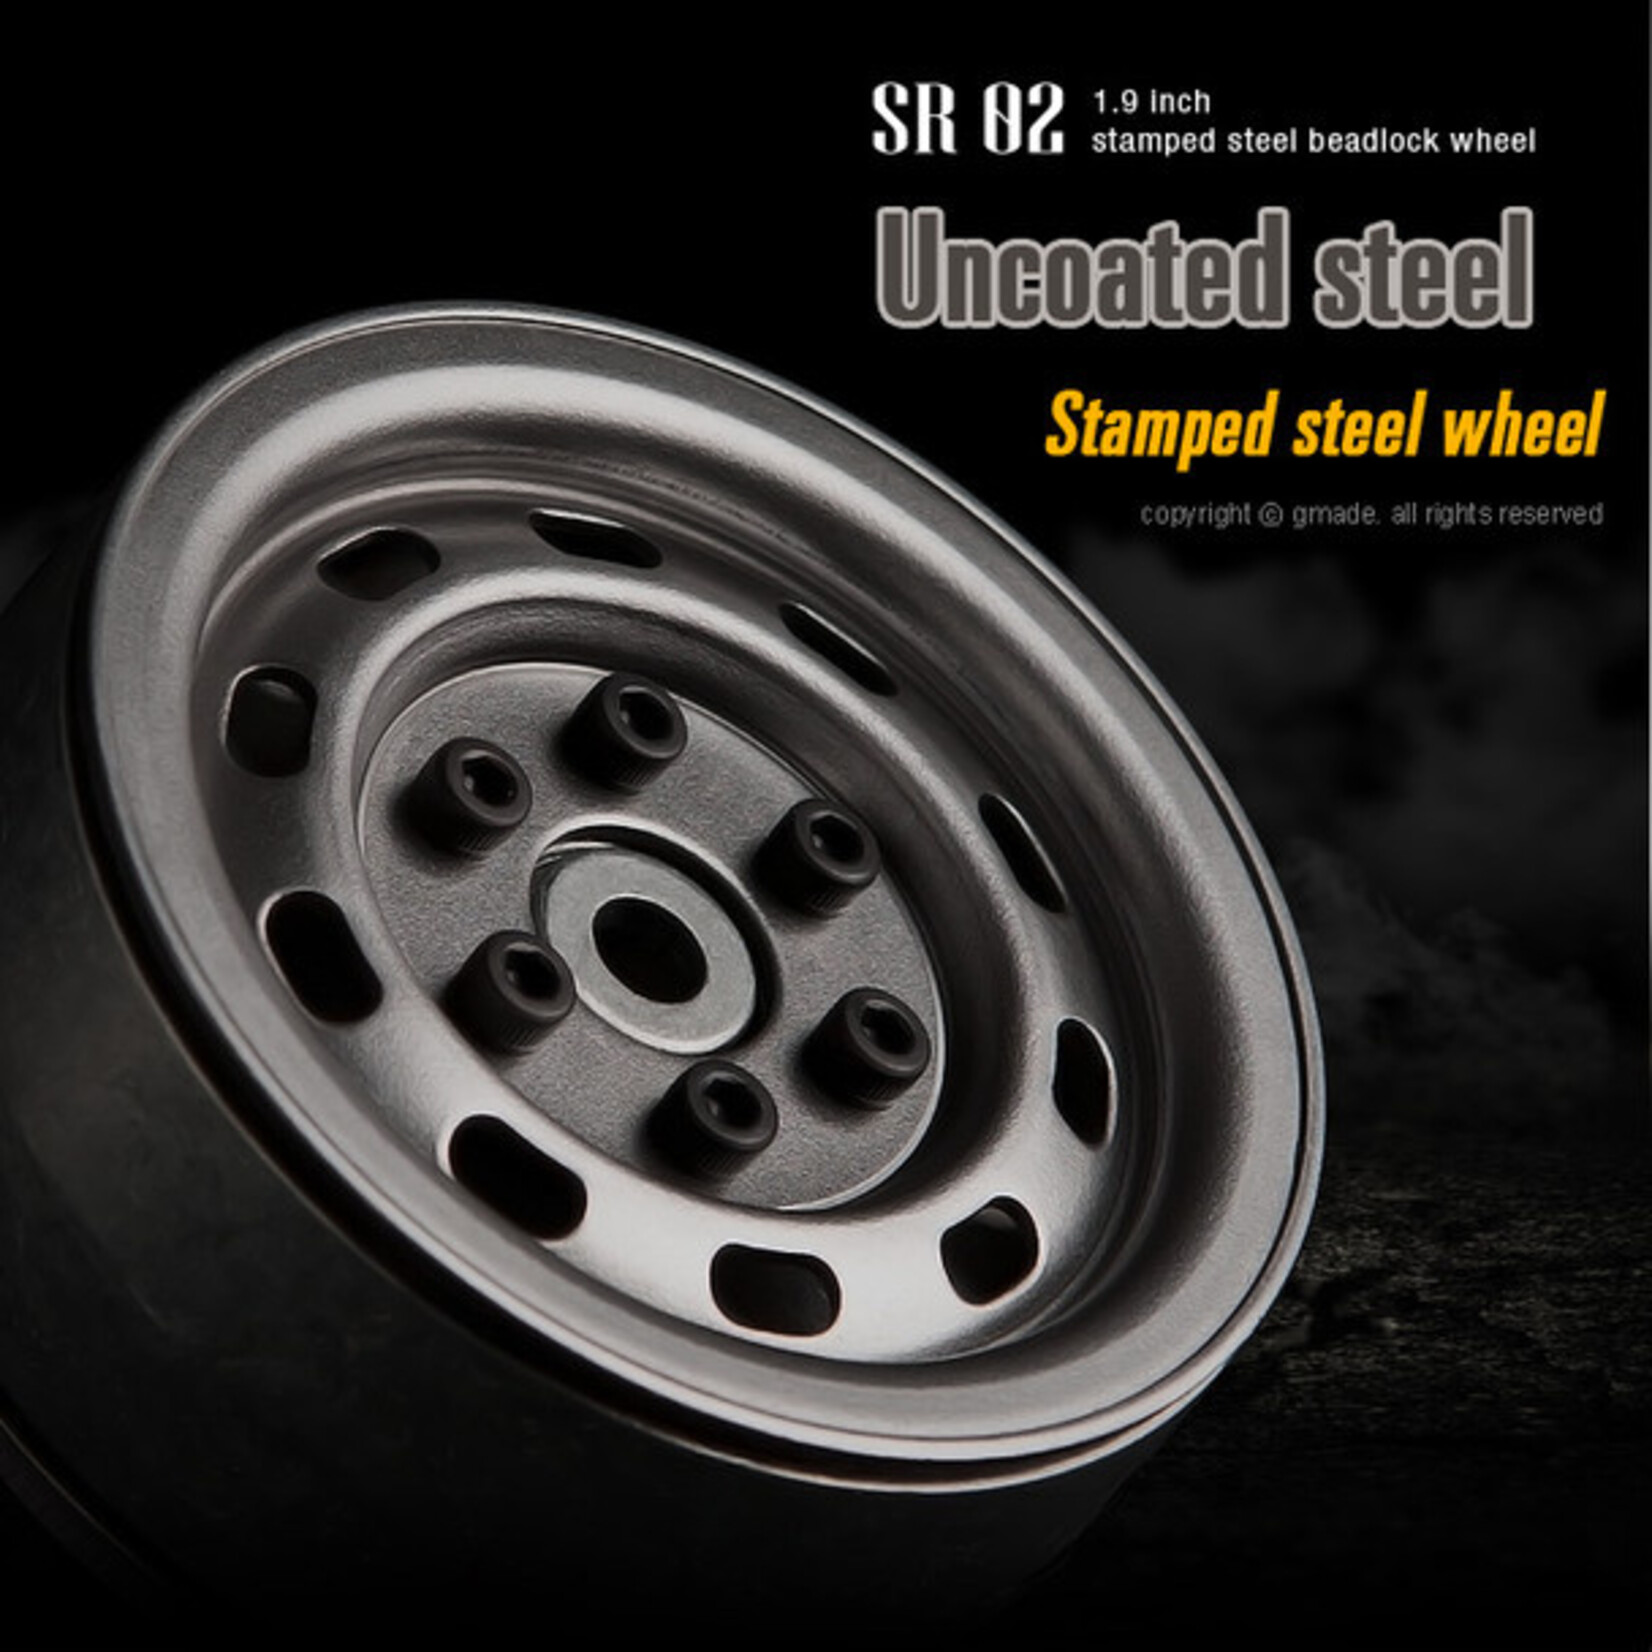 Gmade Gmade 1.9" SR02 Beadlock Wheels (Uncoated Steel) (2) #GM70177